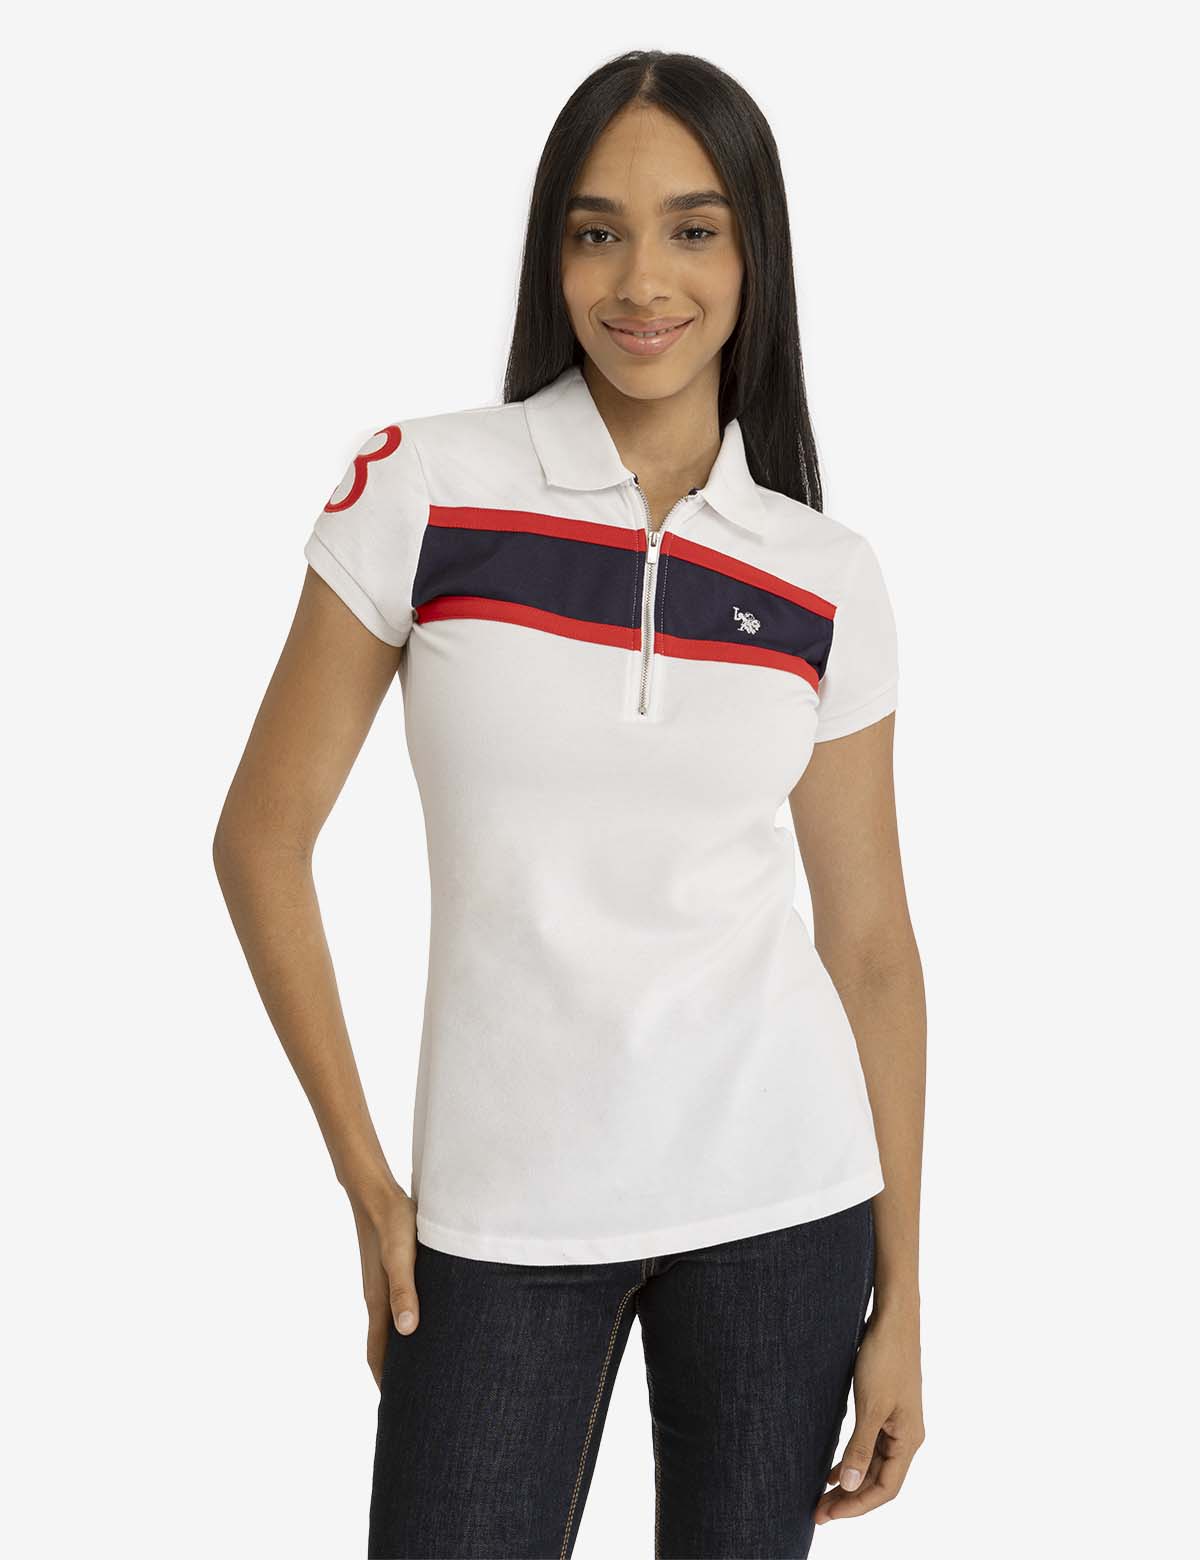 Женская рубашка-поло с молнией U.S. POLO ASSN. U.S. POLO ASSN.